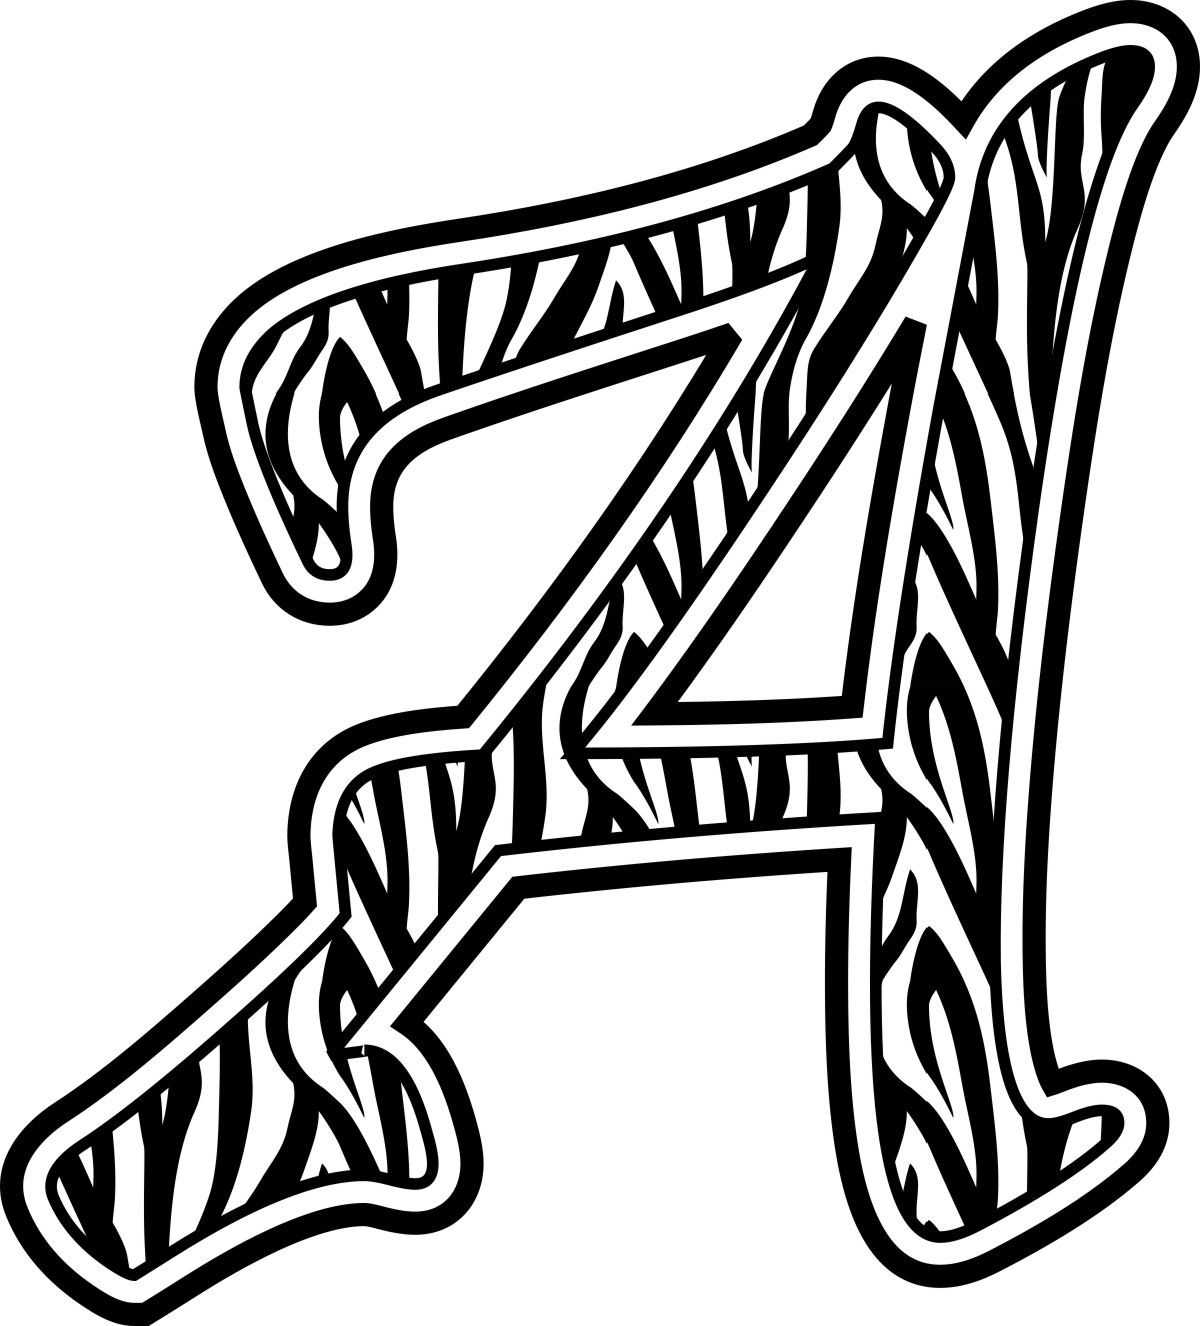 printable-digital-alphabet-black-white-grey-series-a-to-z-1-10-cutout